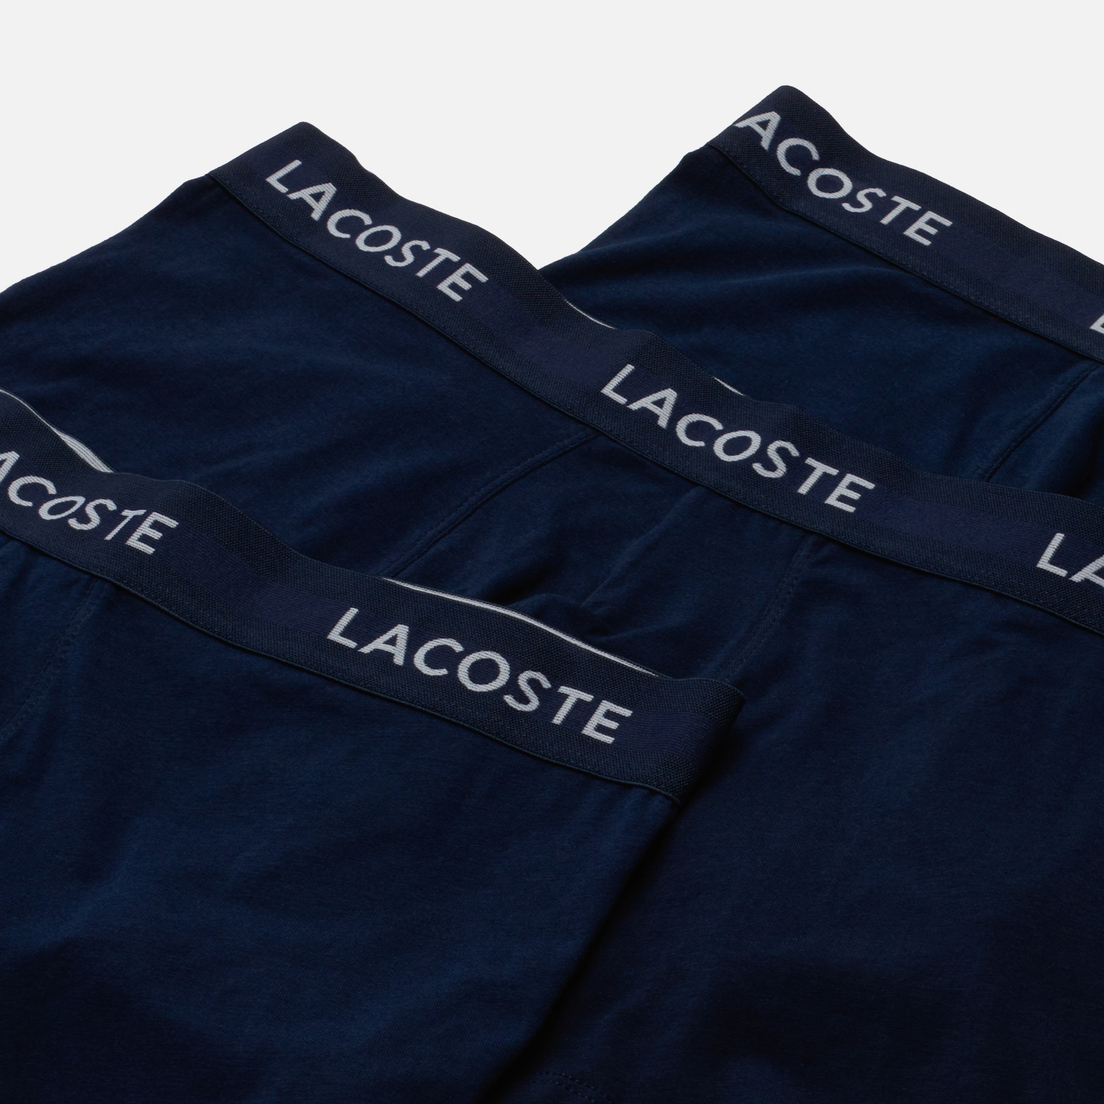 Lacoste Underwear Комплект мужских трусов 3-Pack Iconic Waist Logo